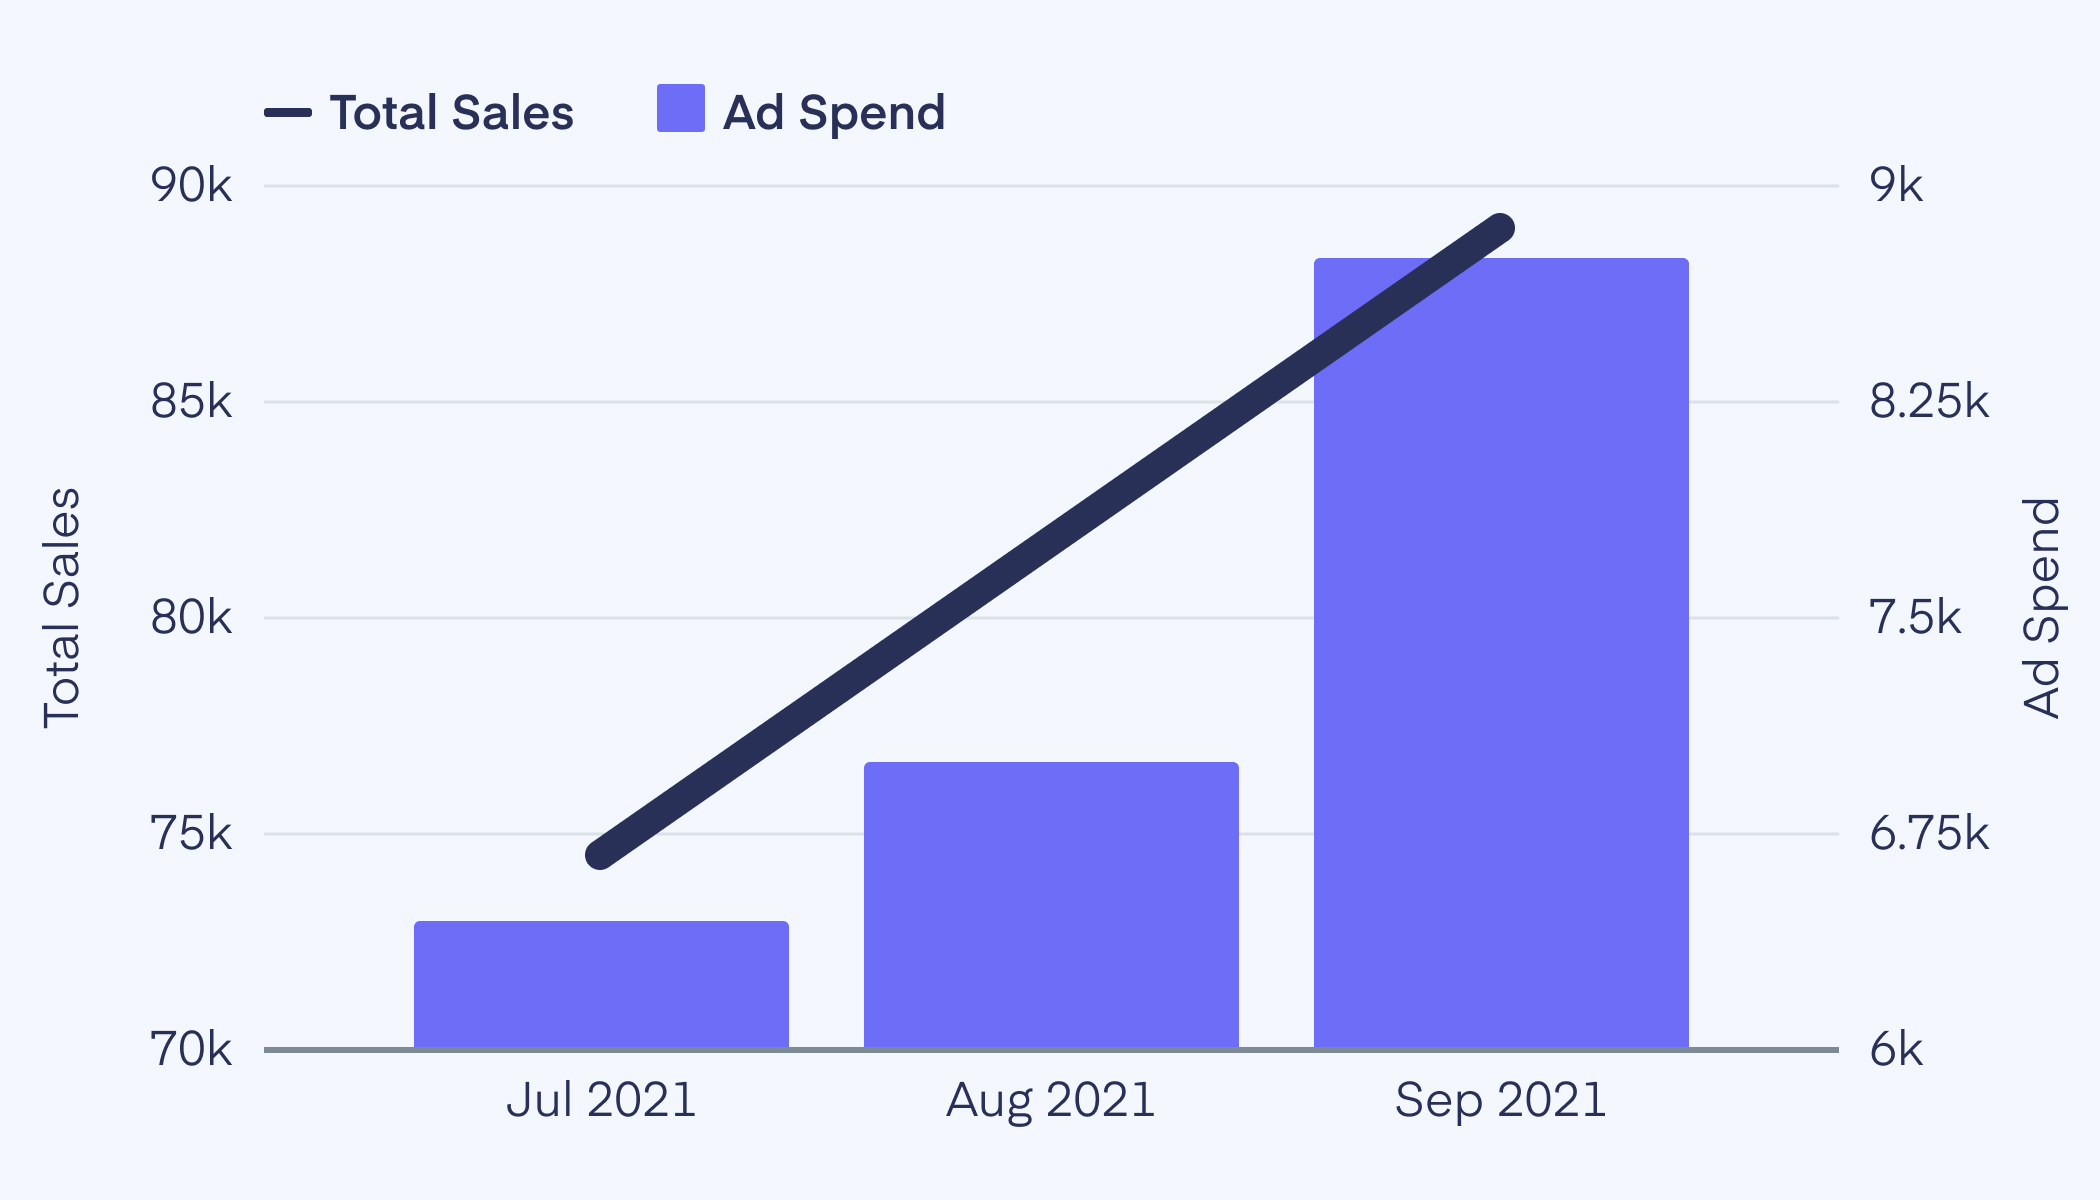 Total Sales vs. Ad Spend on Amazon